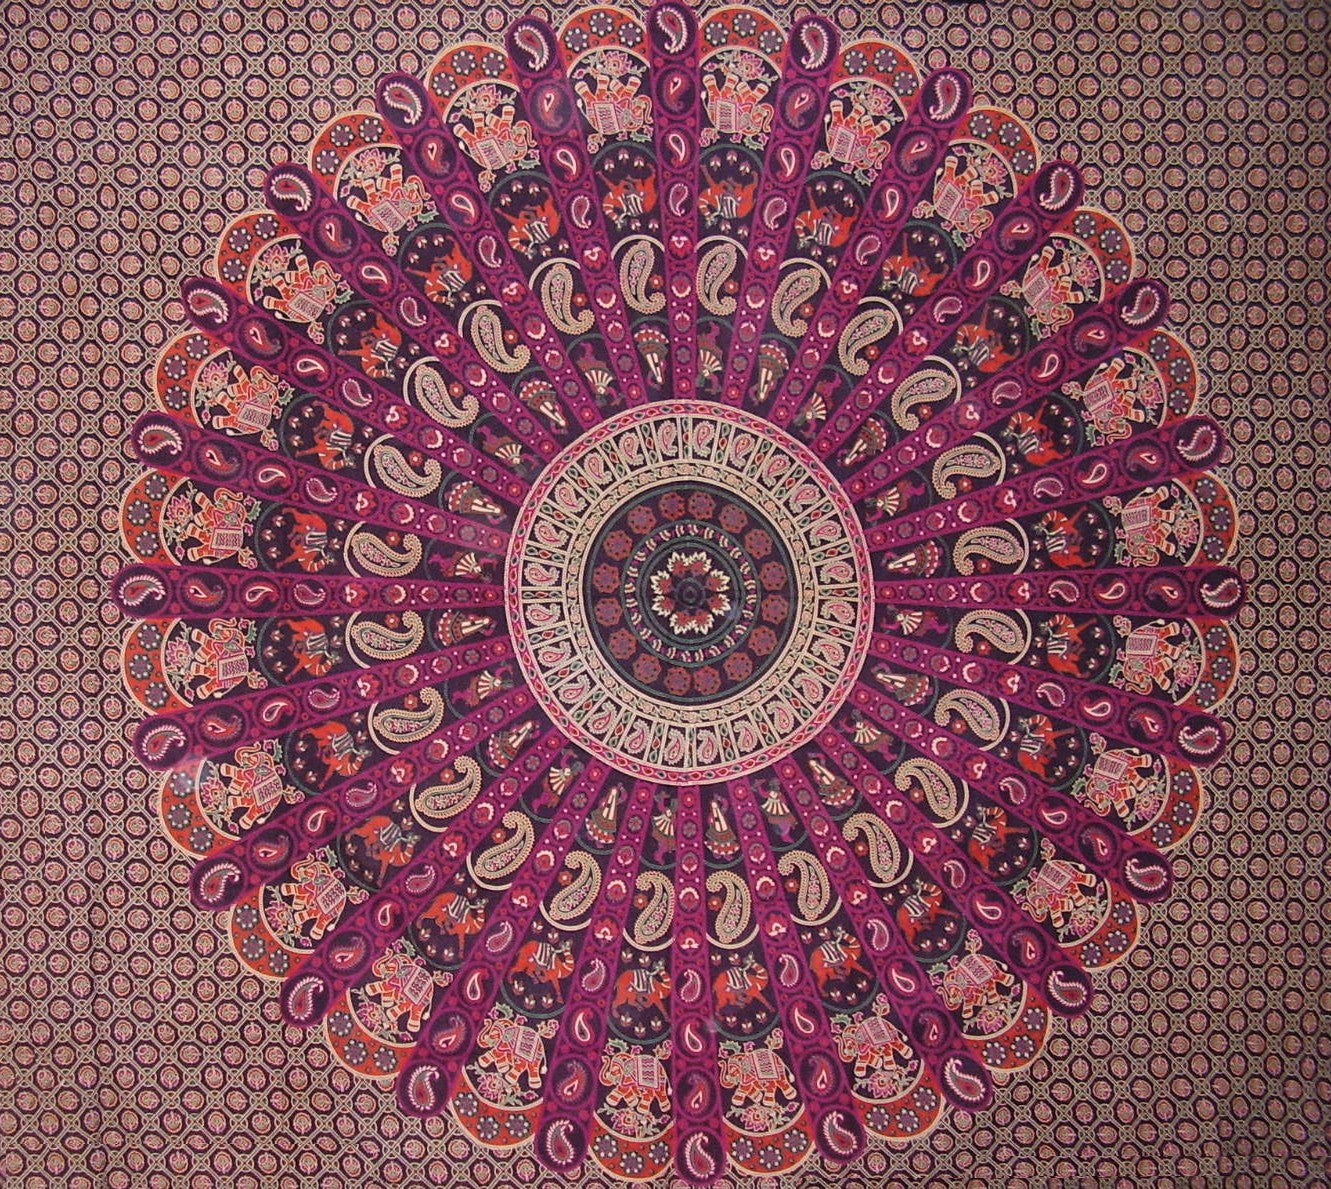 Indian Mandala Print Tapestry Cotton Bedspread 92" x 82" Full Eggplant